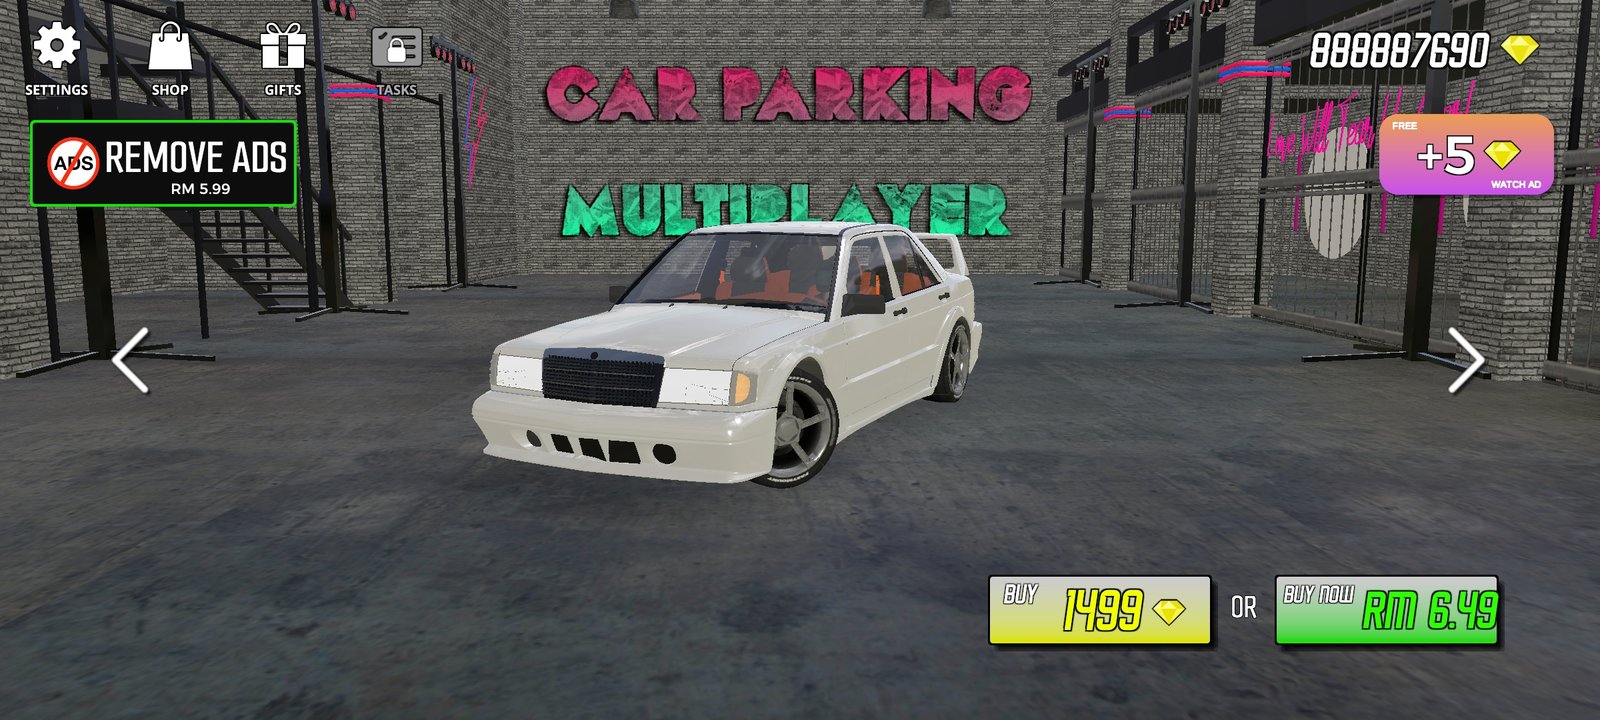 Car Parking Multiplayer Mod APK 4.8.14.8 [Mod Menu, Unlocked Everything]